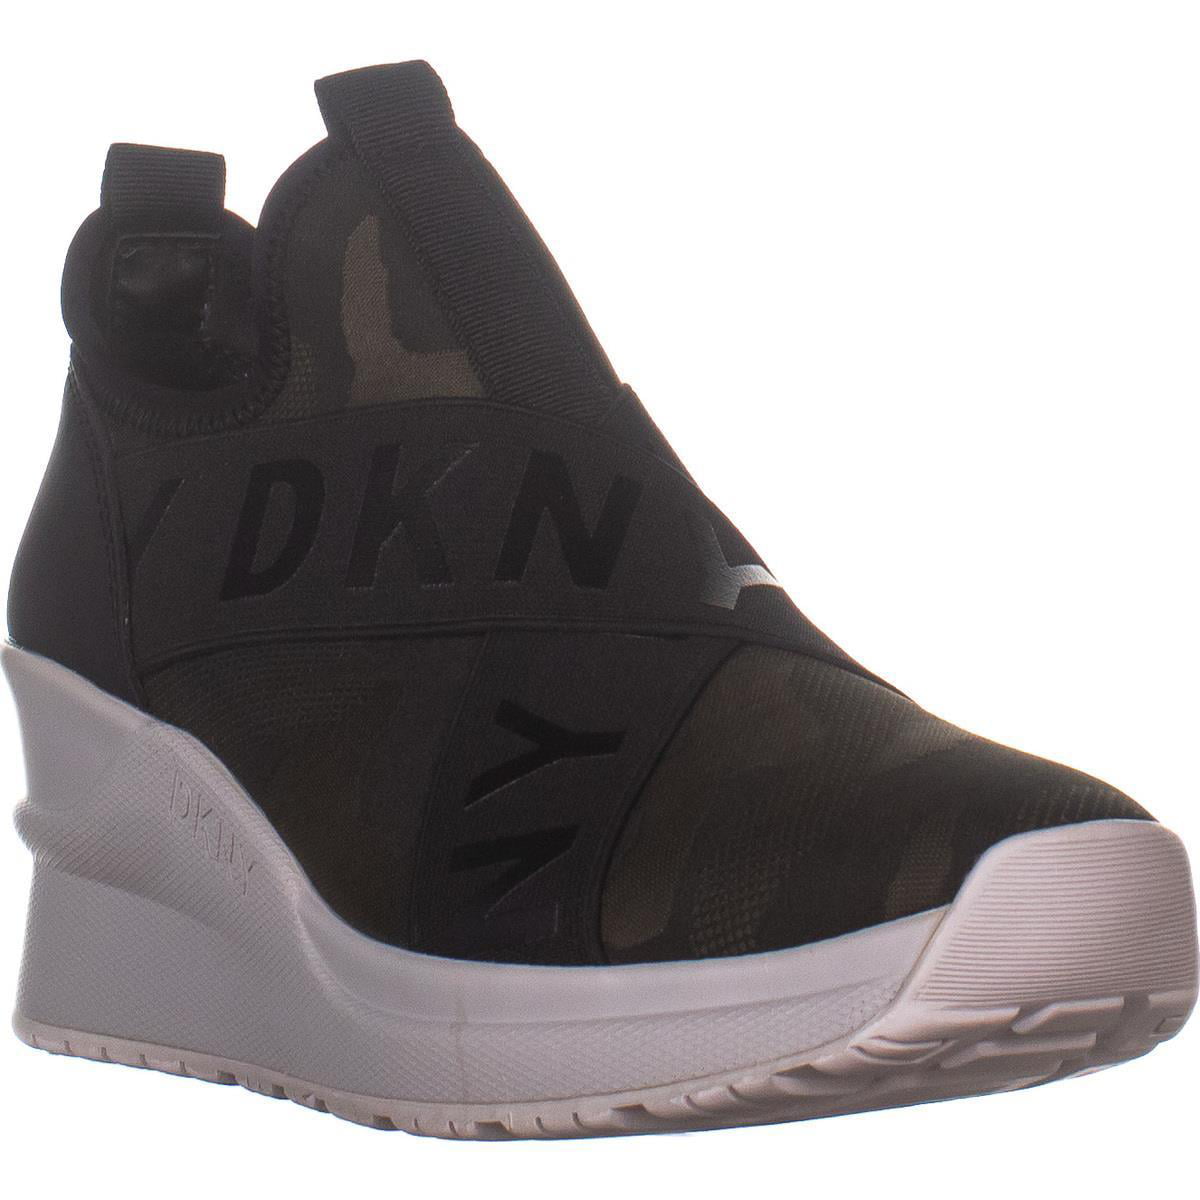 dkny camo sneakers